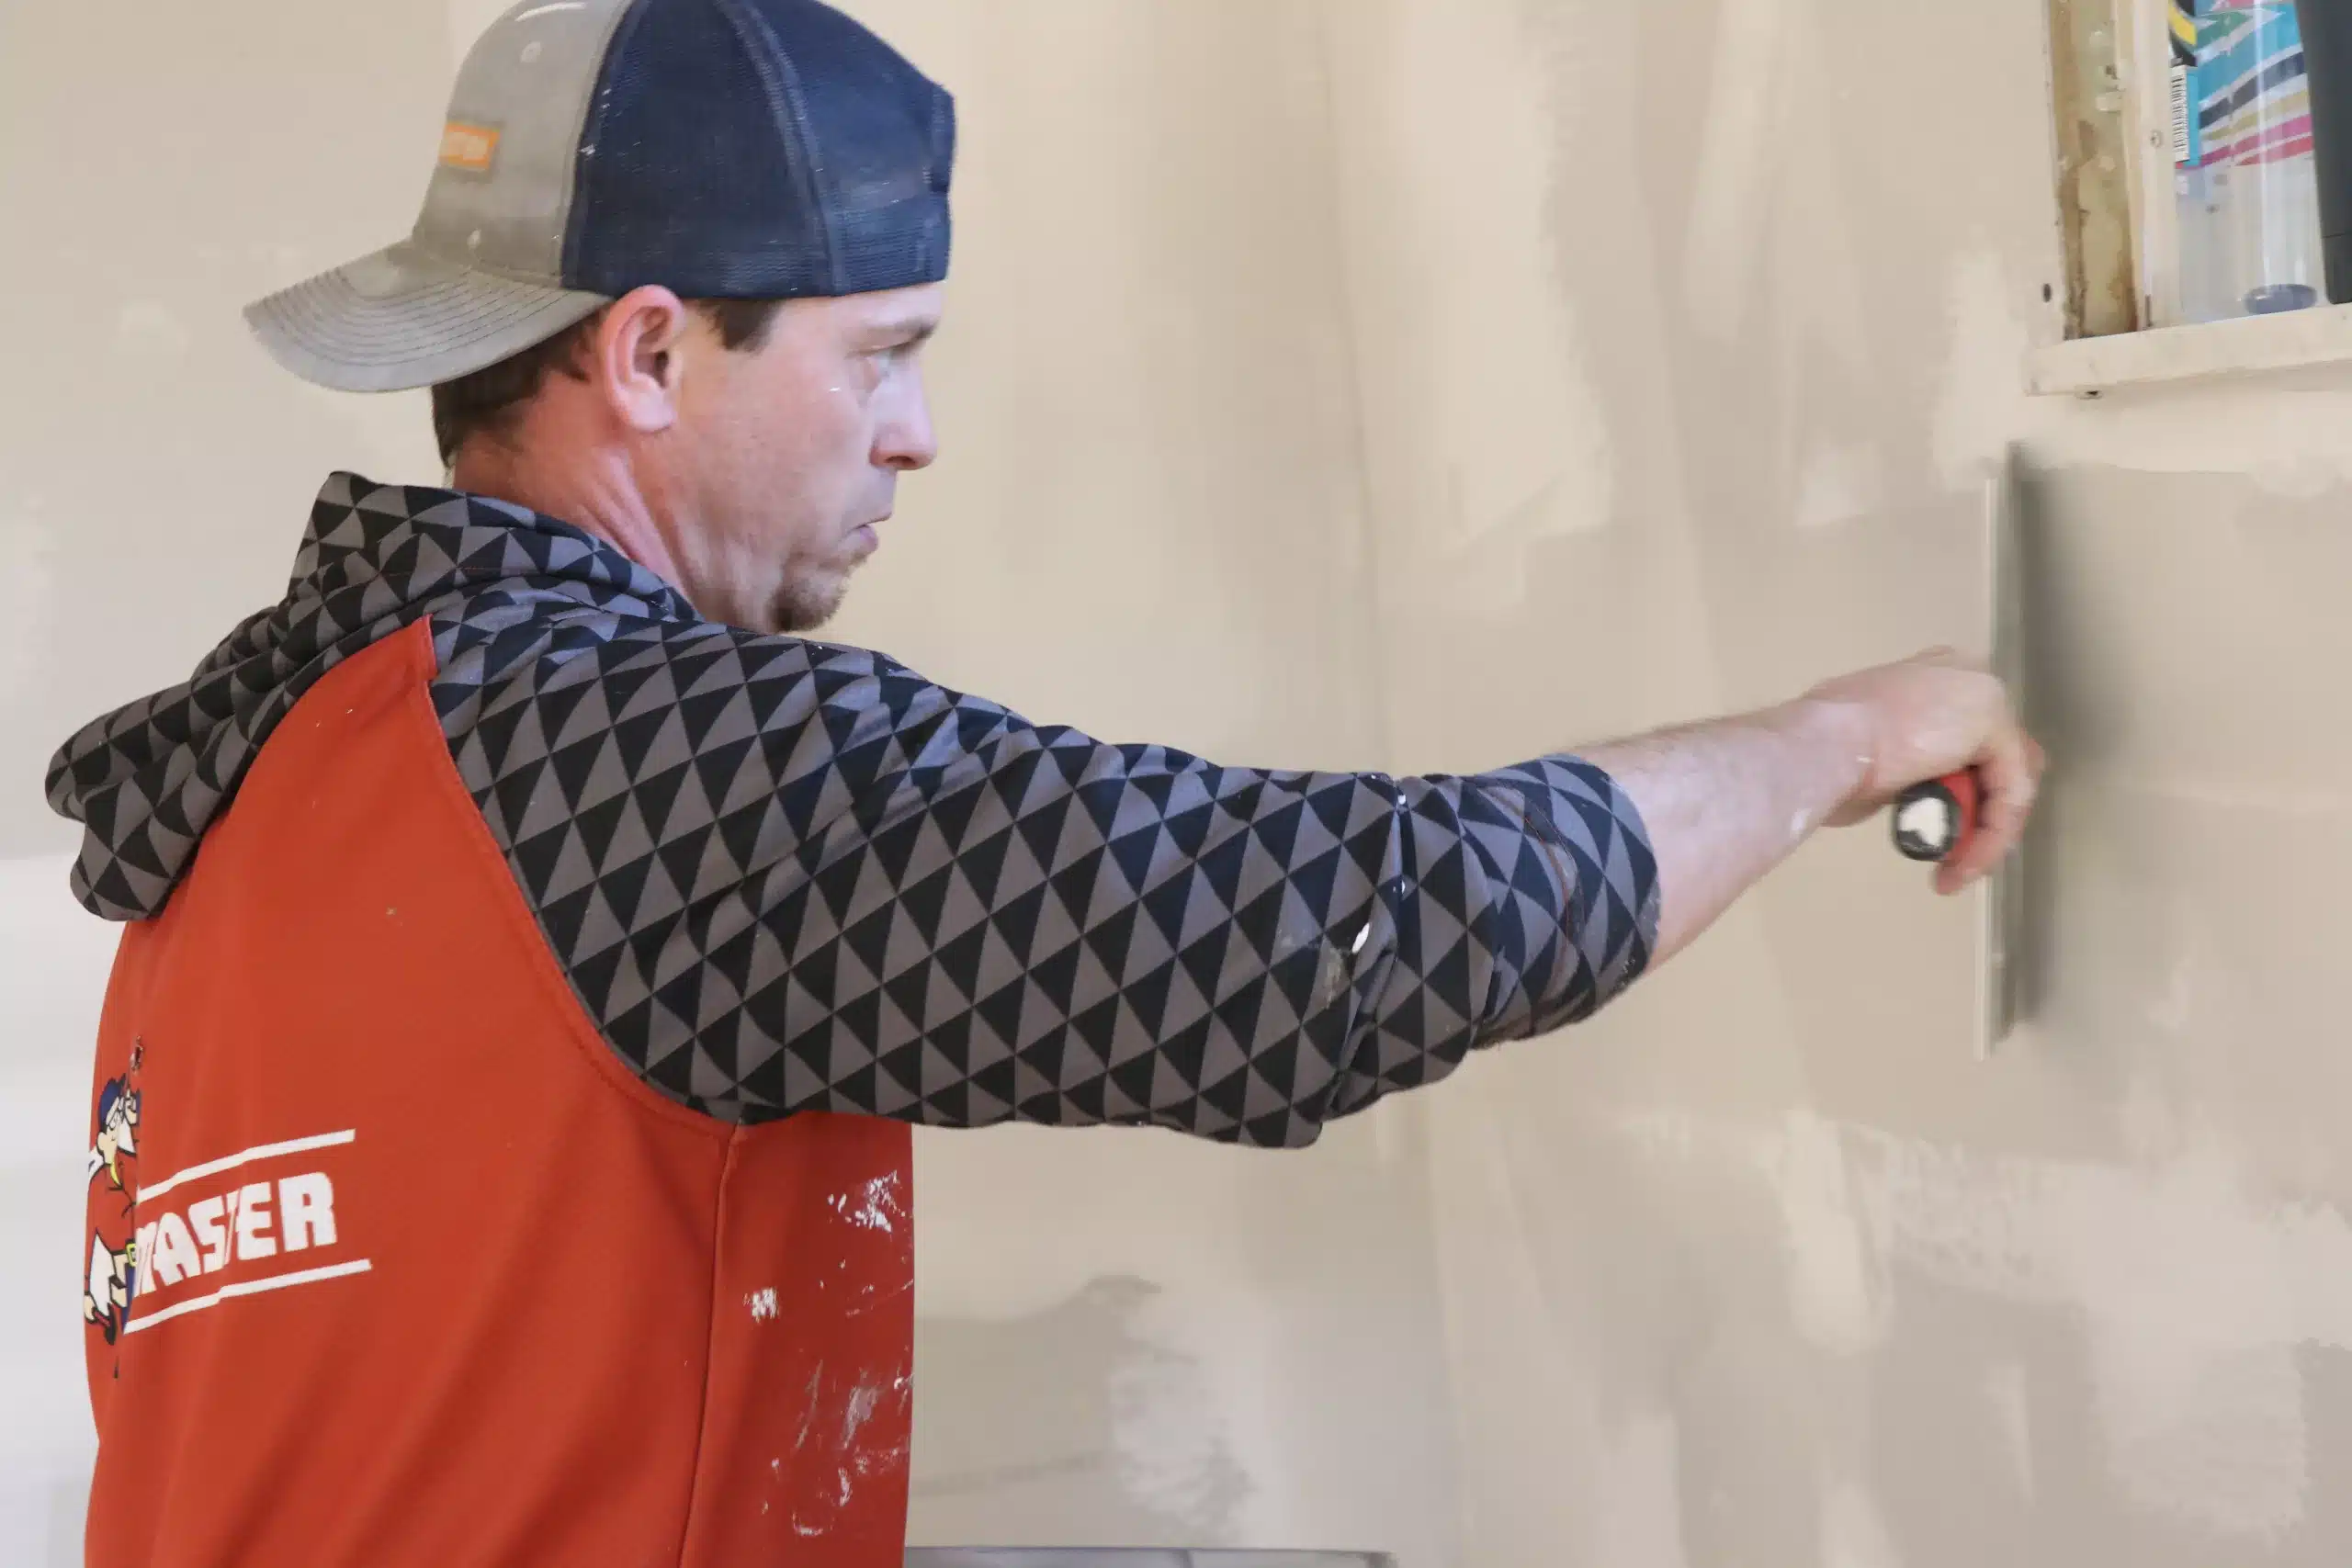 ProMaster craftsman performs drywall repairs as part of Cincinnati winter home maintenance.